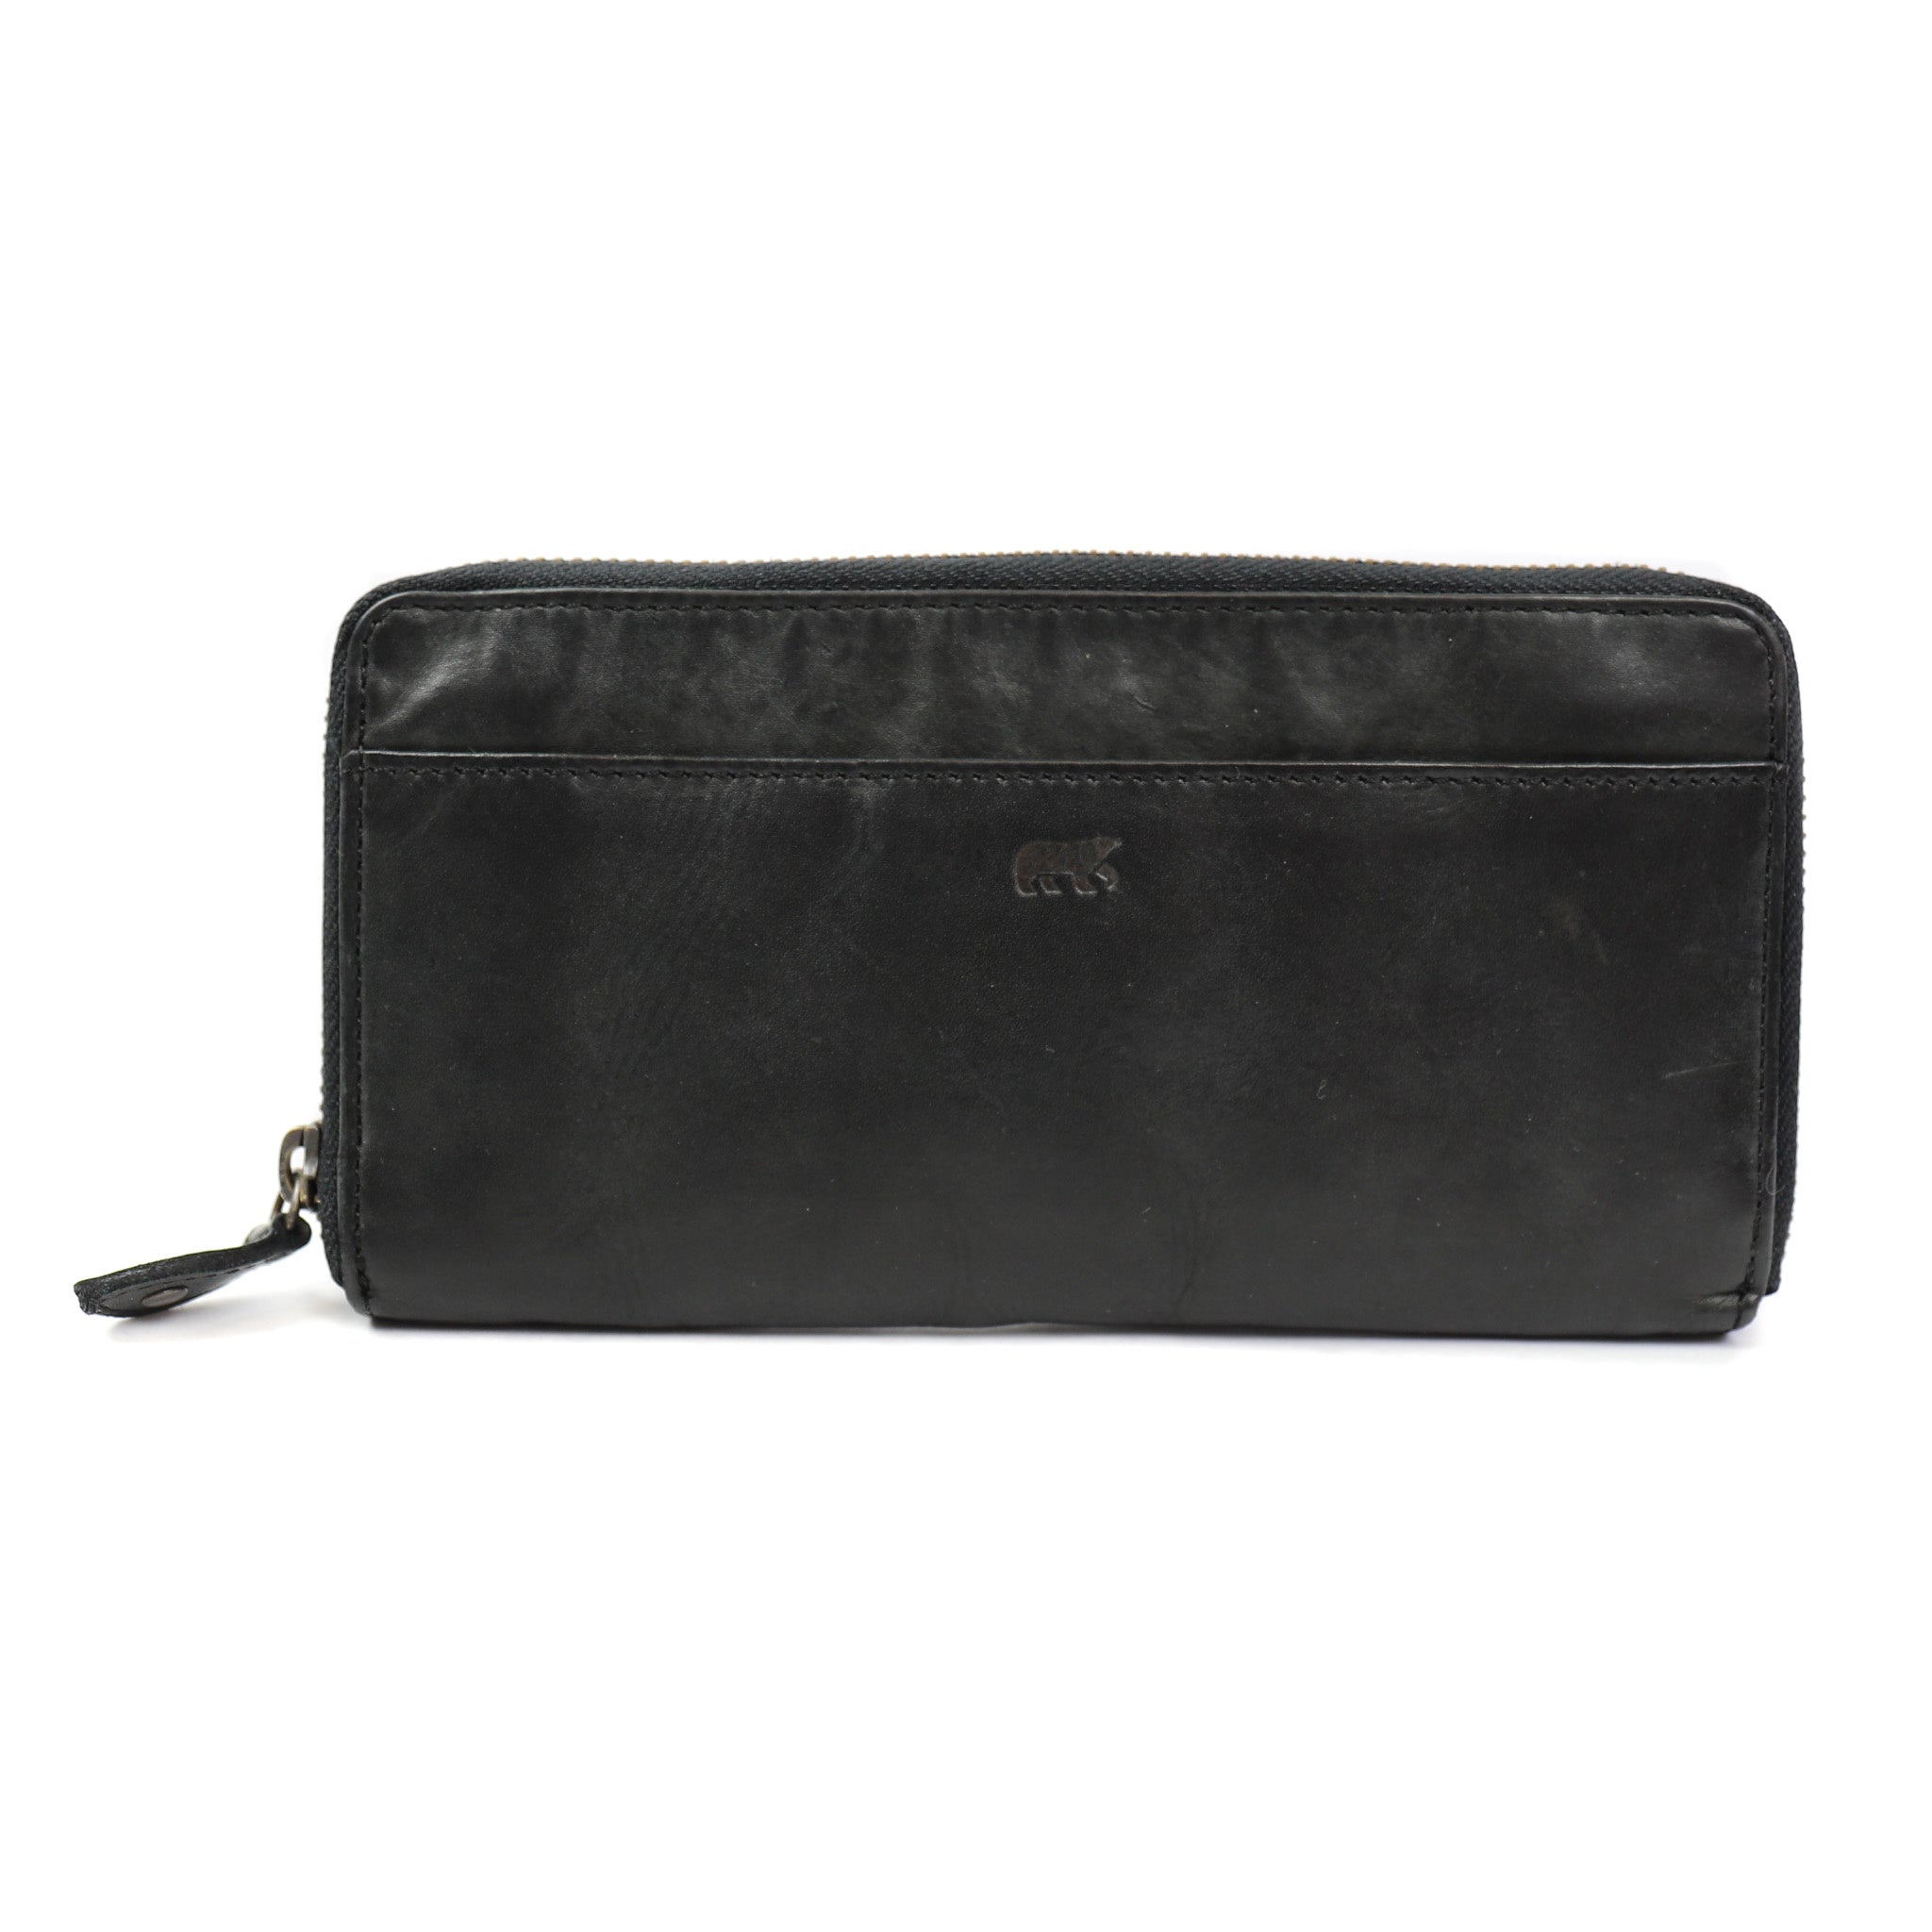 Zipper wallet 'Sofie' black - CL 15882